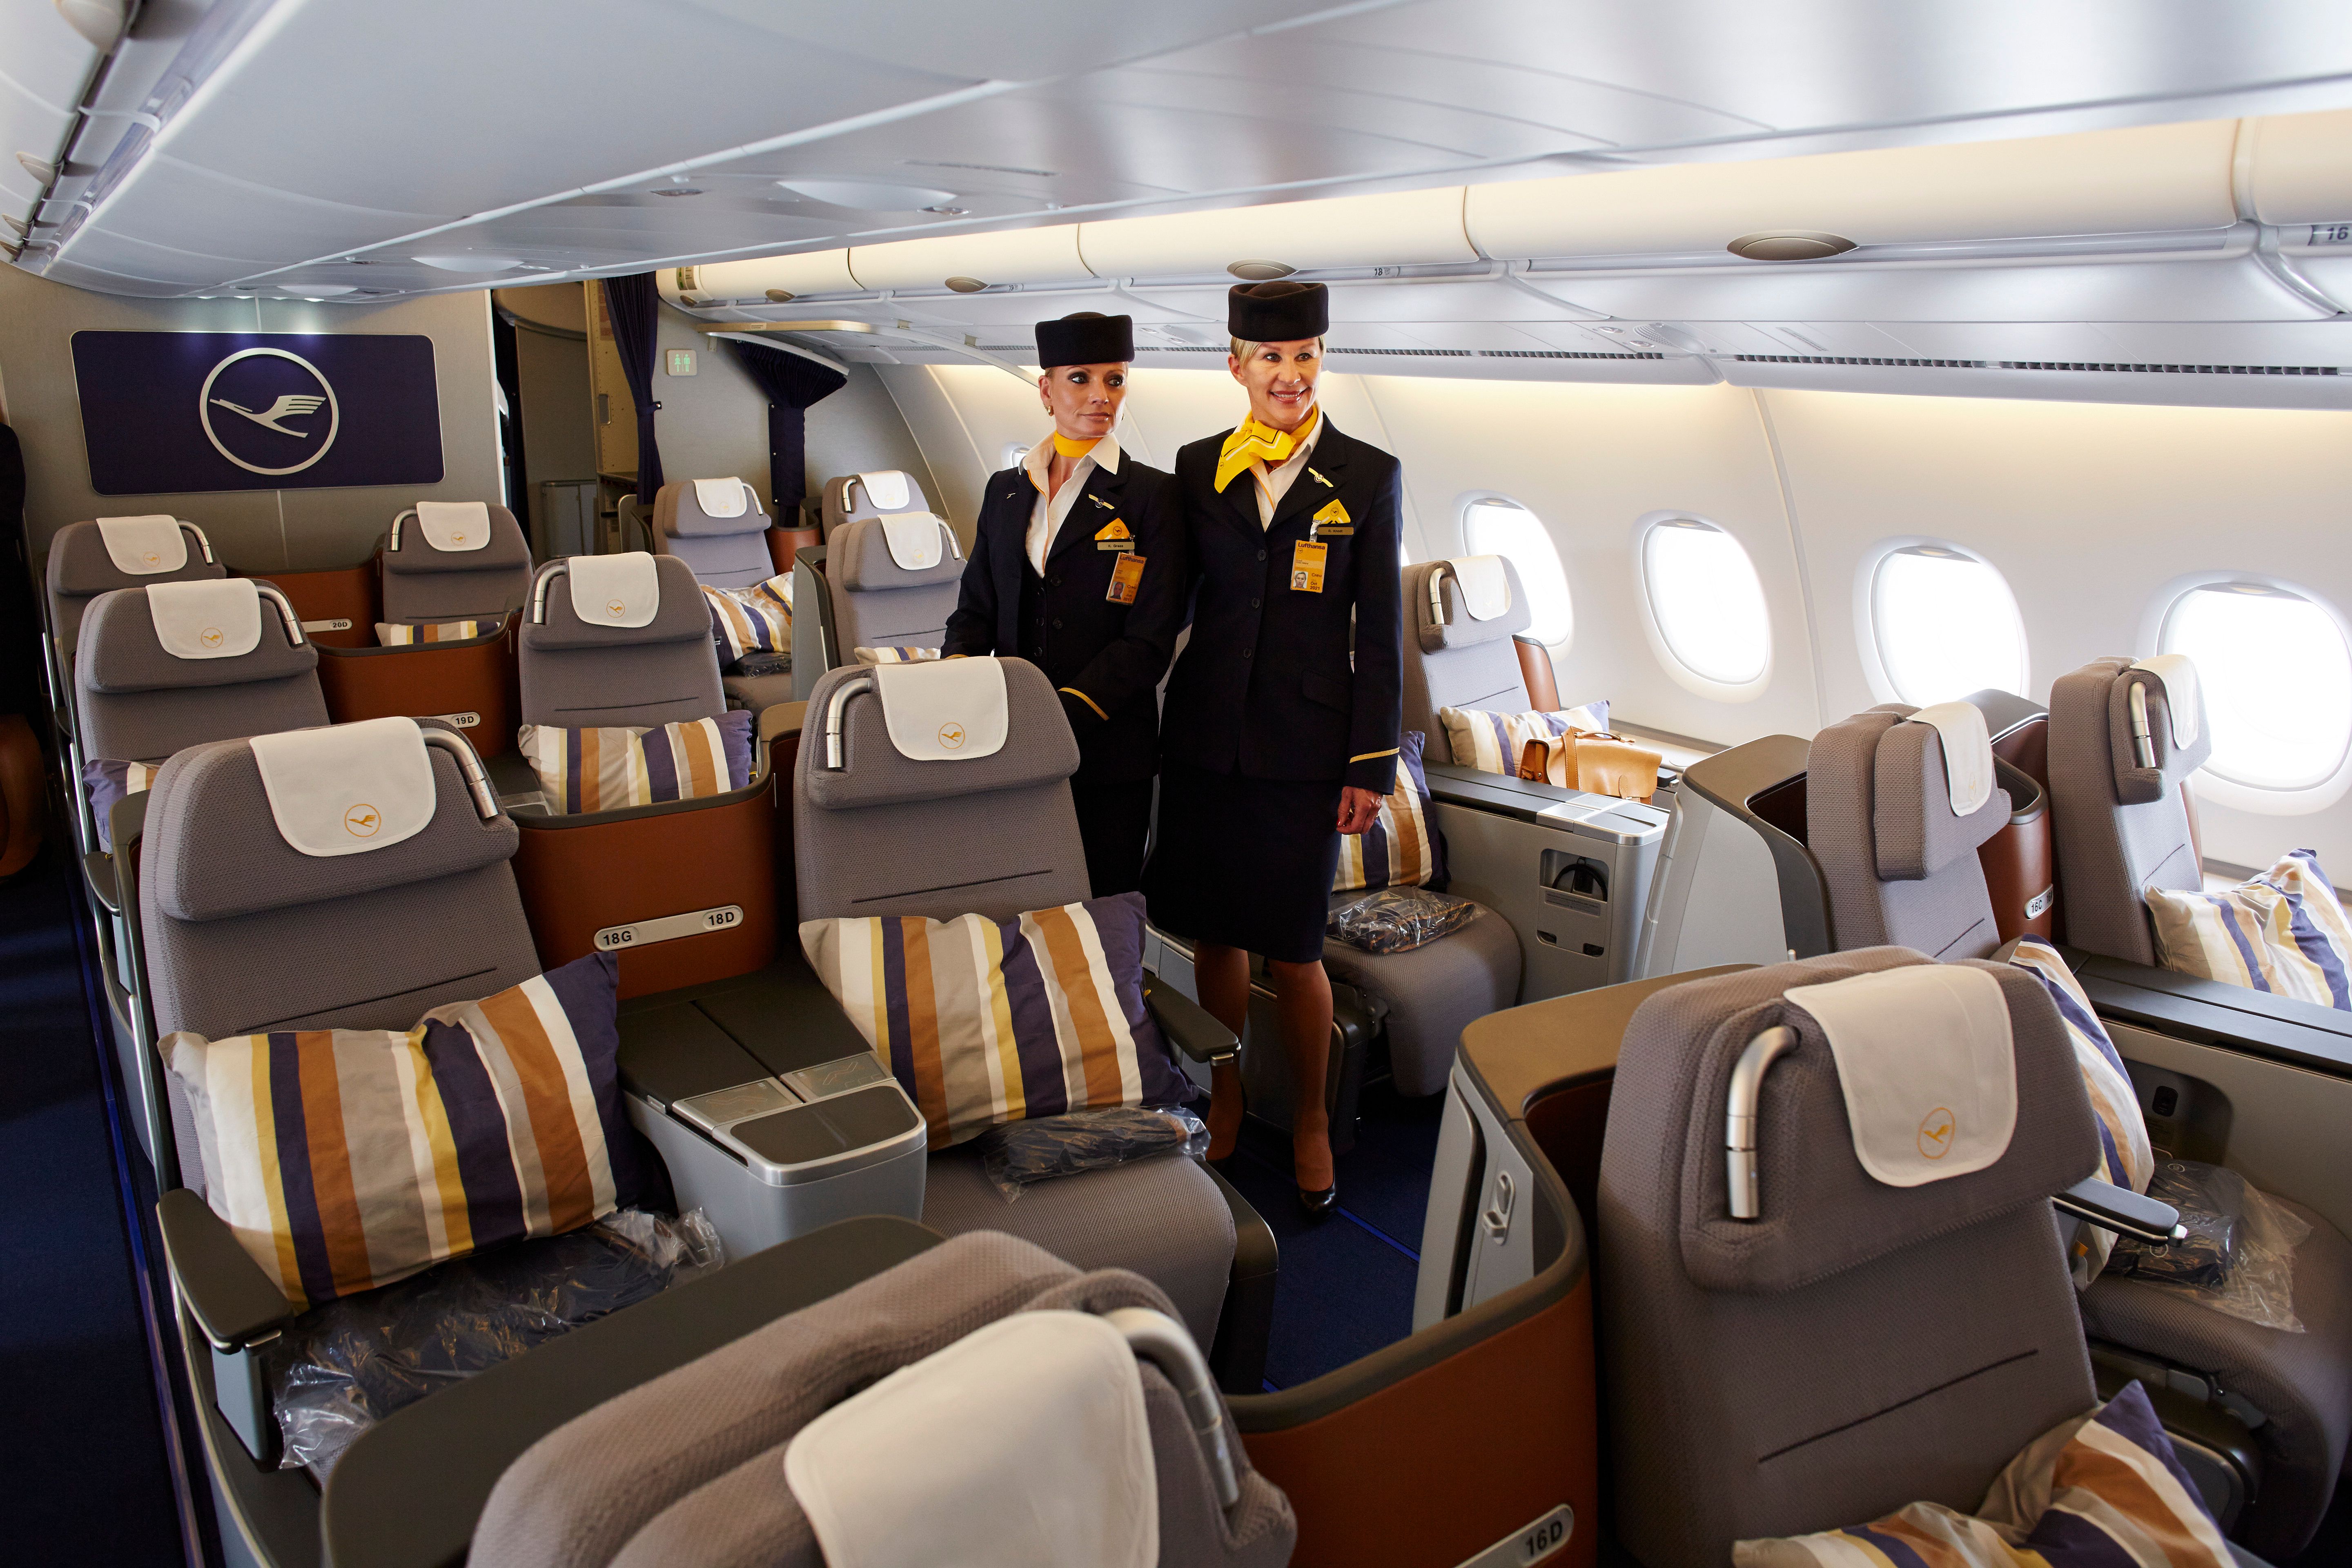 Lufthansa Airbus A380 business class cabin.